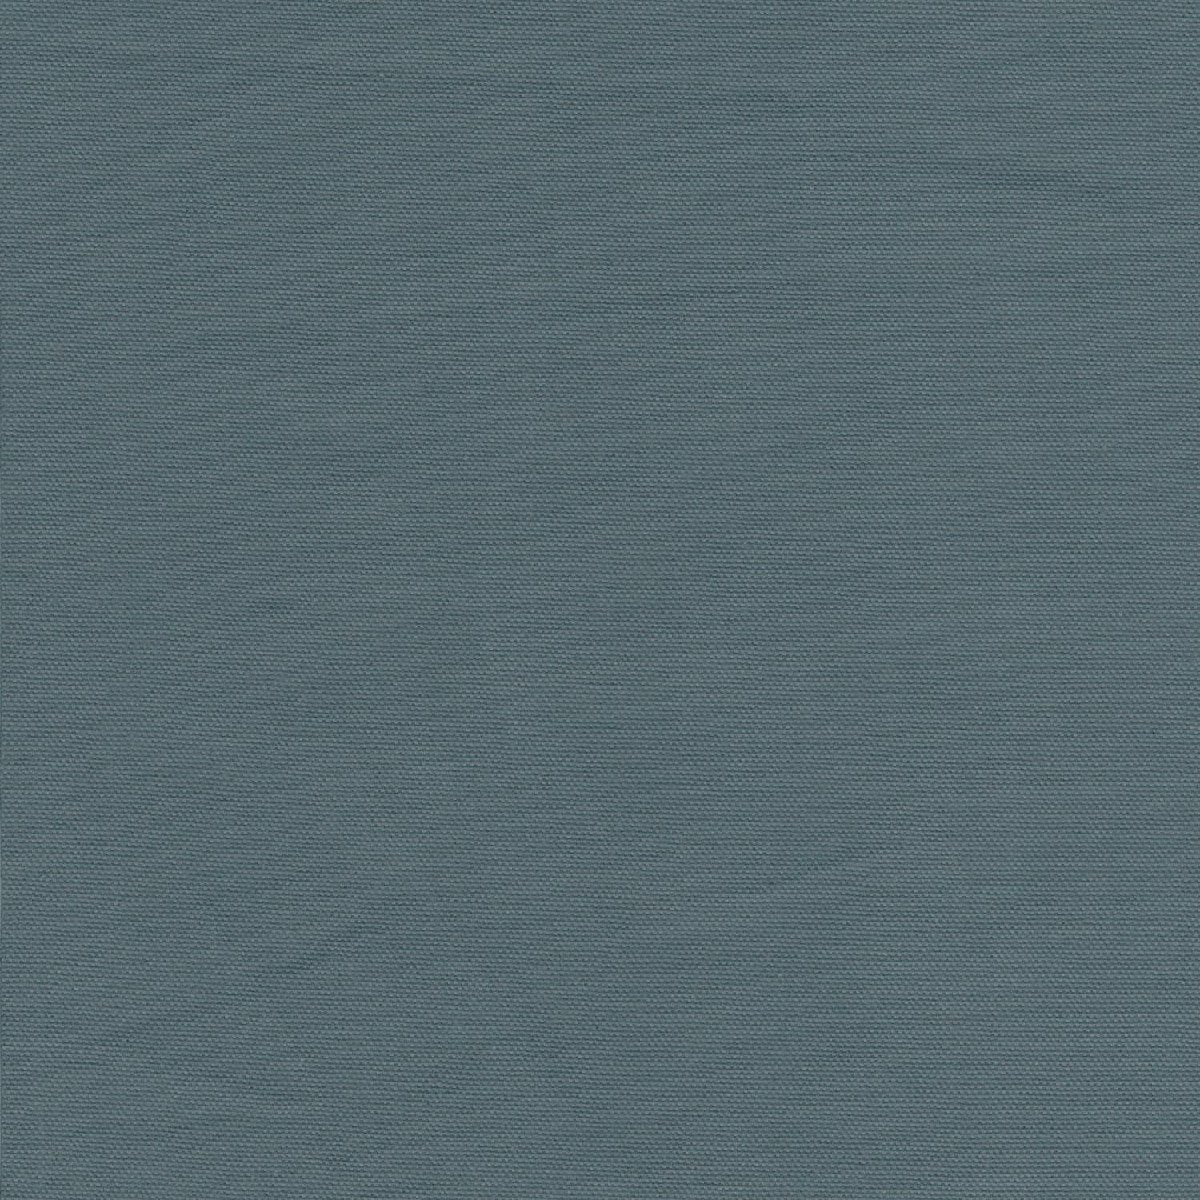 Numero74 | bliss cotton canvas yoga bag | ice blue - mondocherry - material